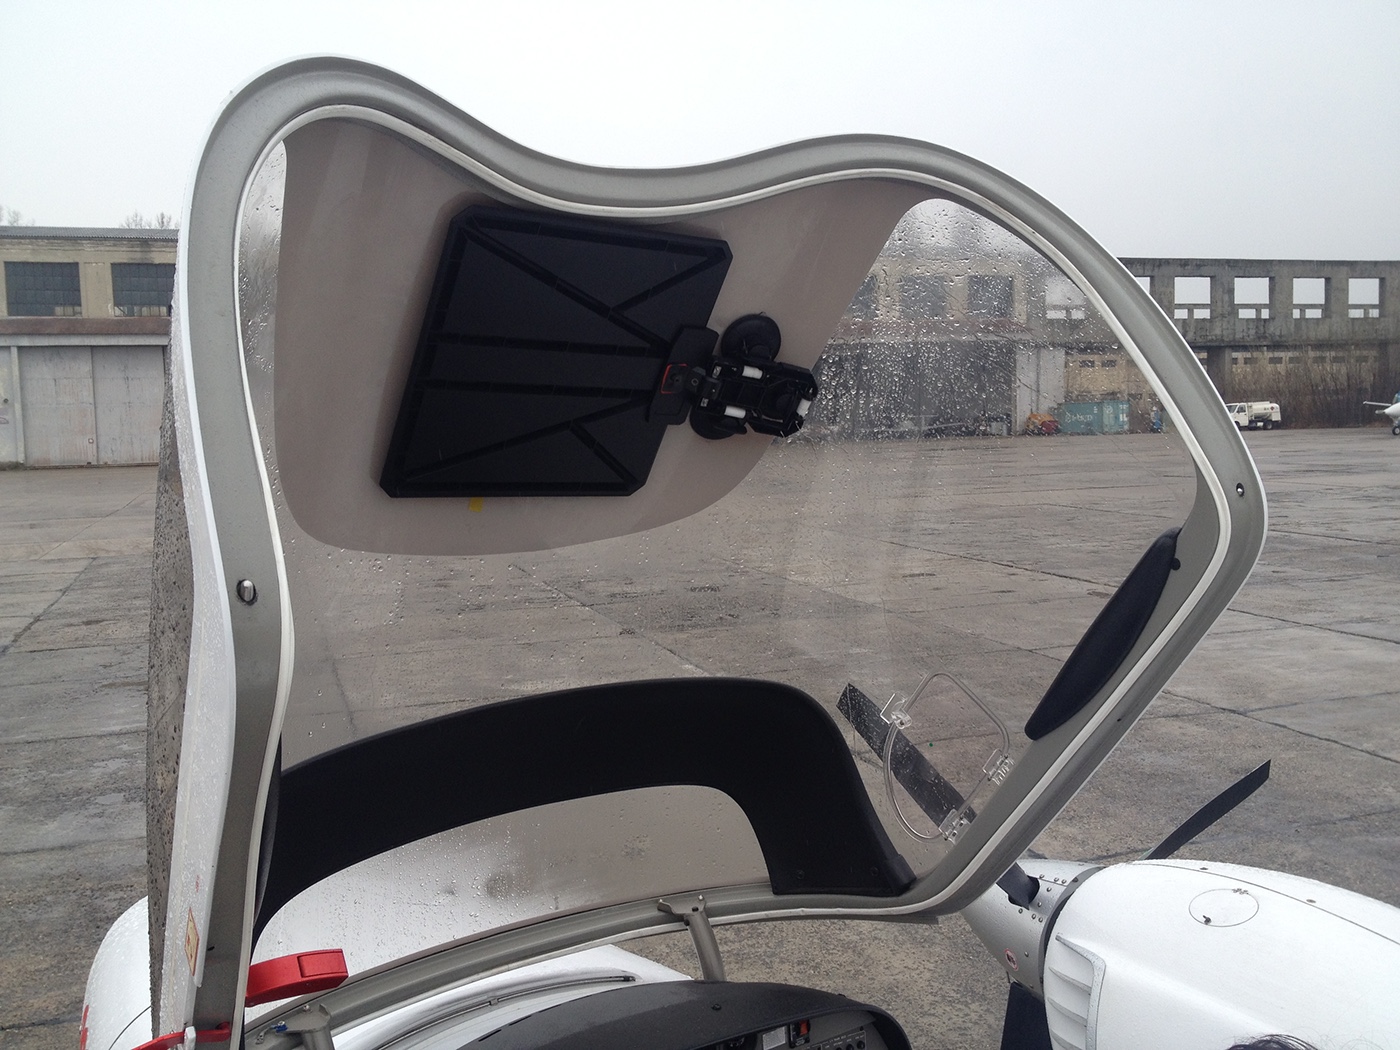 aero glass Igen design igendesign augmented reality Engineering  navigation Aircraft